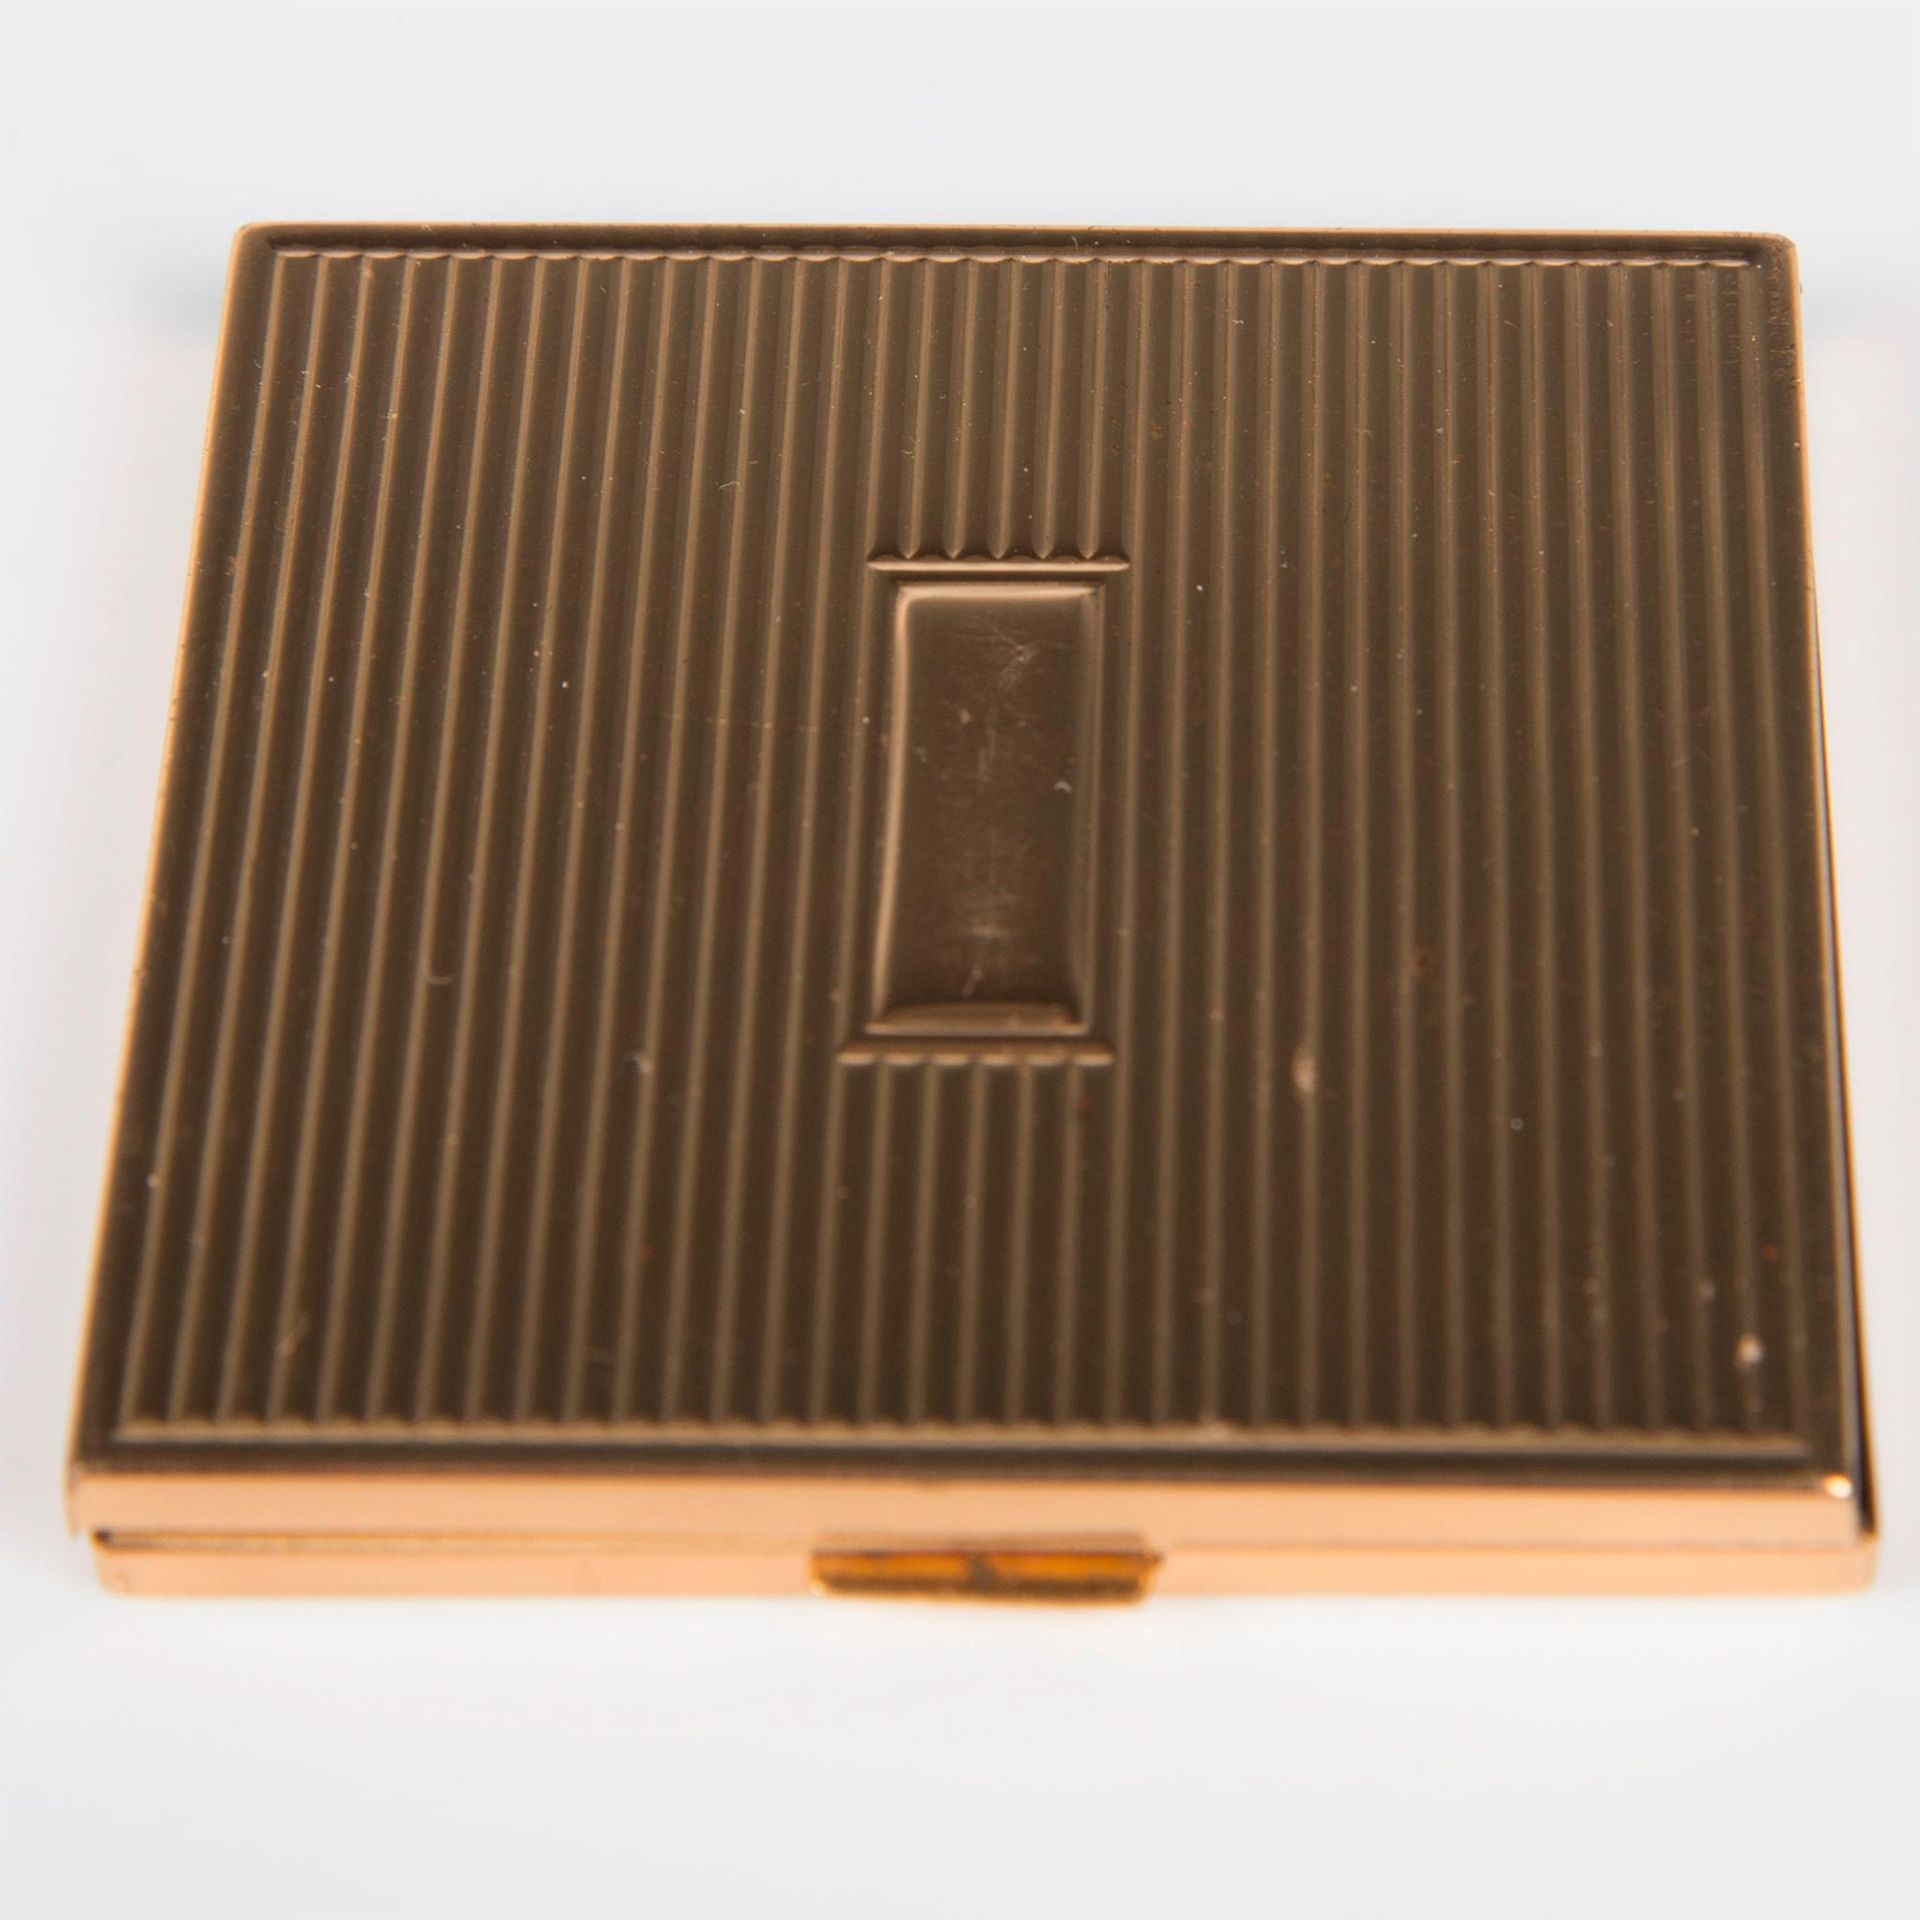 Evans Gold Tone Compact Case